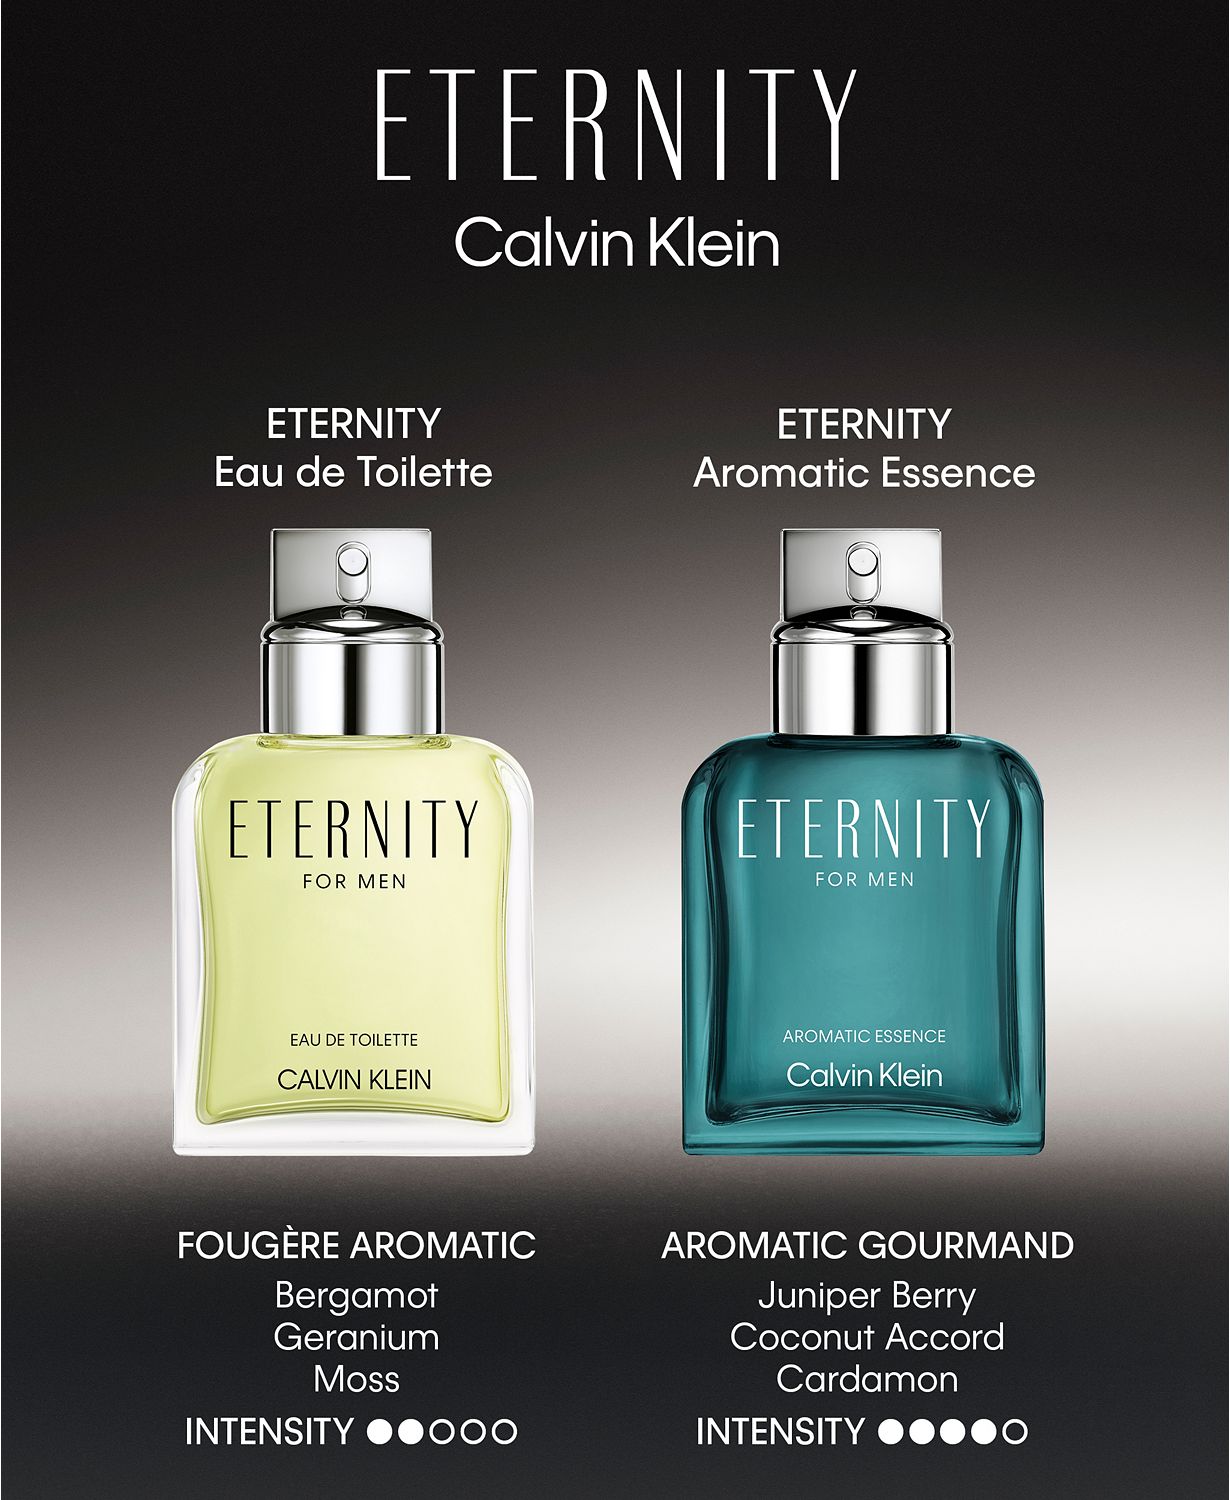 Men's Eternity Aromatic Essence Parfum Intense Spray, 6.7 oz.